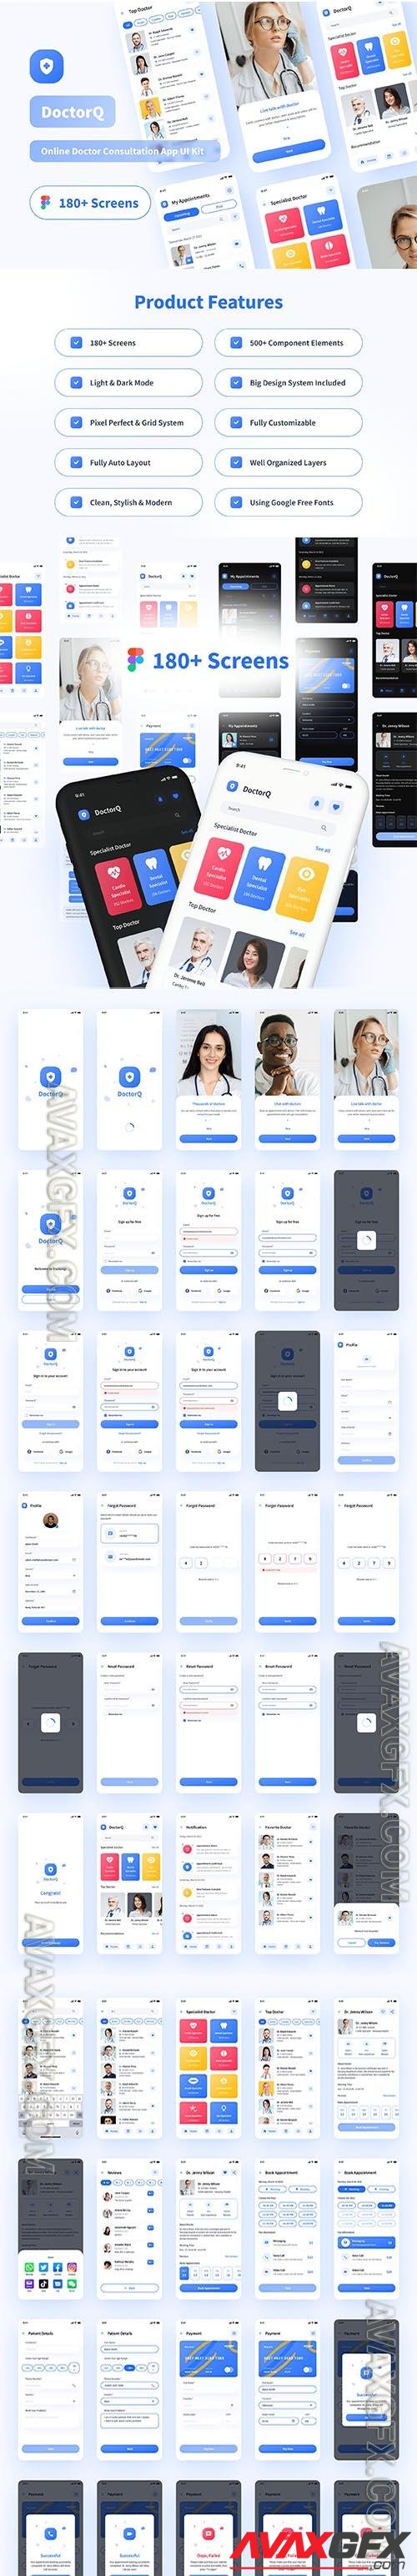 DoctorQ - Online Doctor Consultation App UI Kit